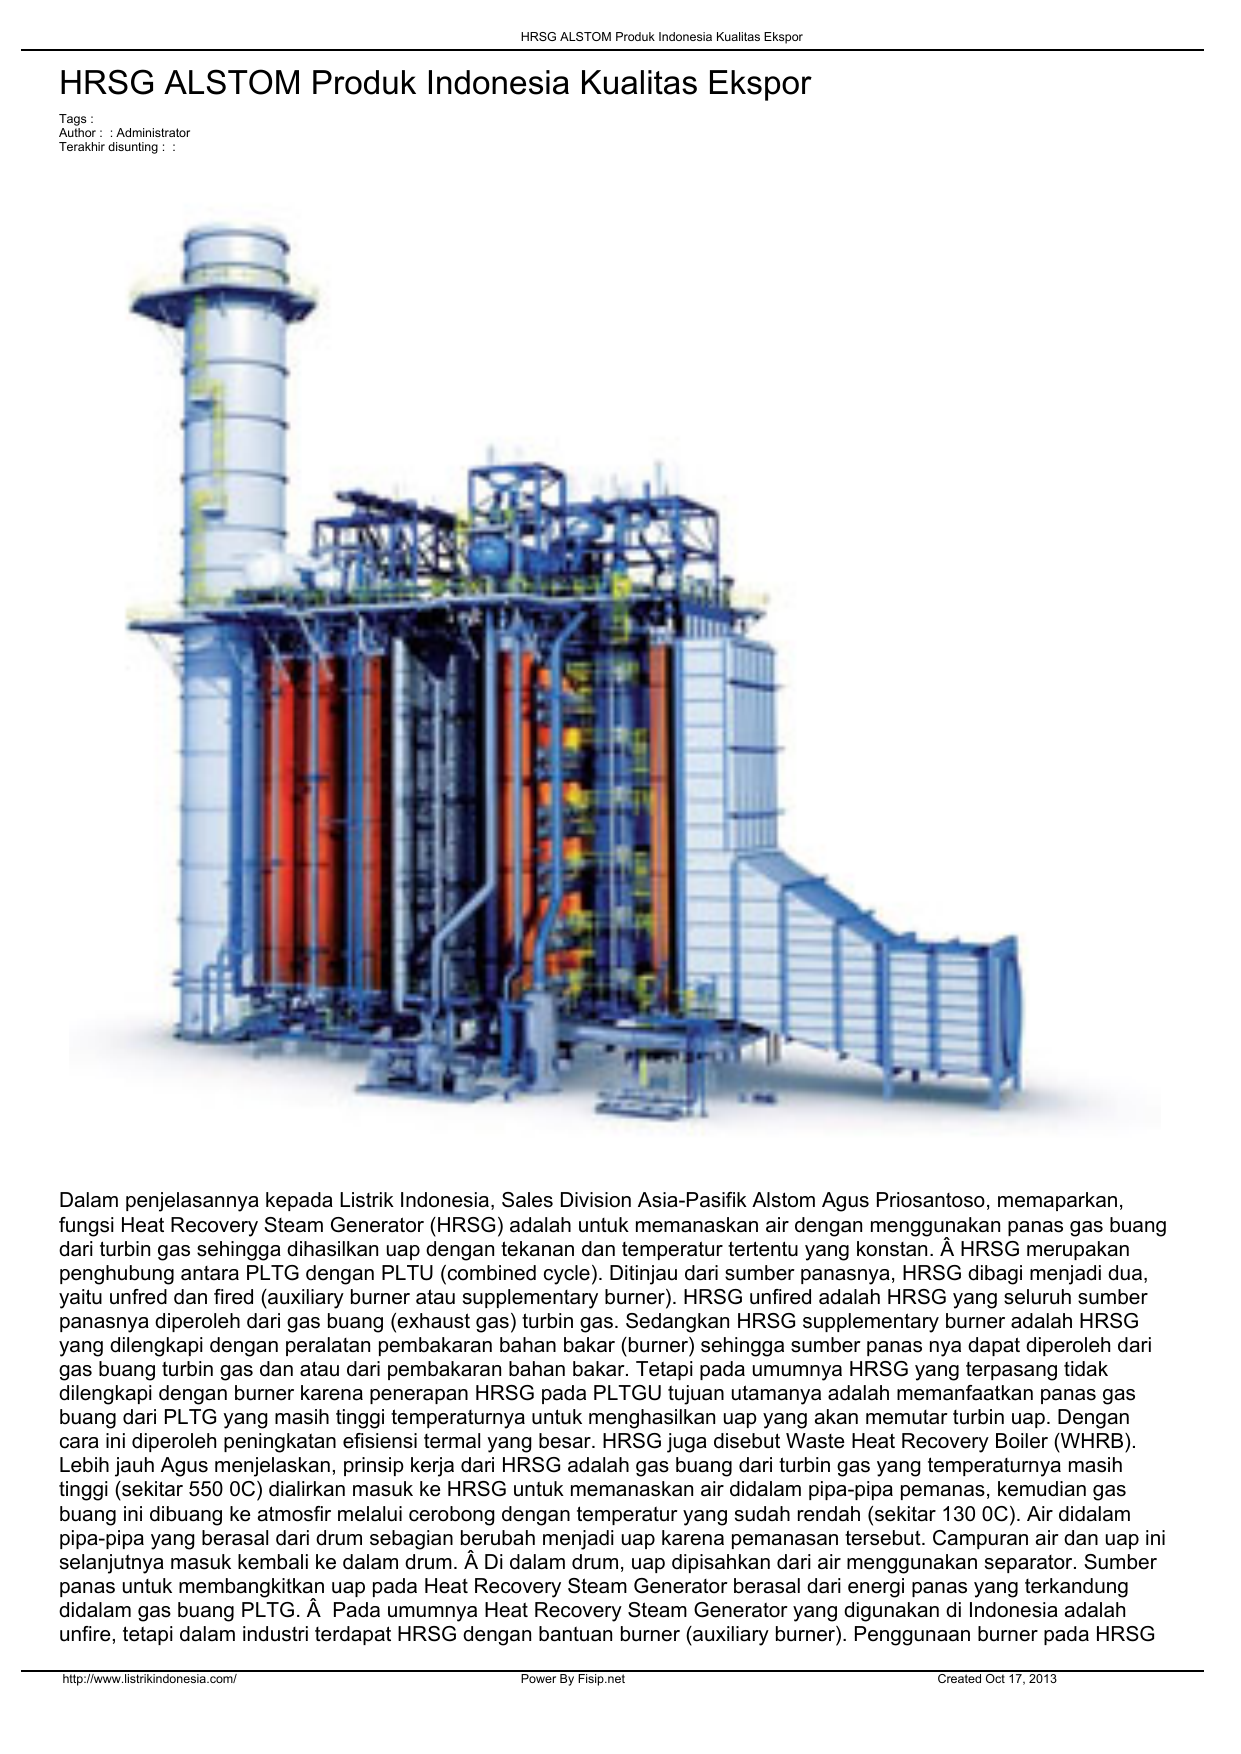 Generator heat recovery steam generator фото 69